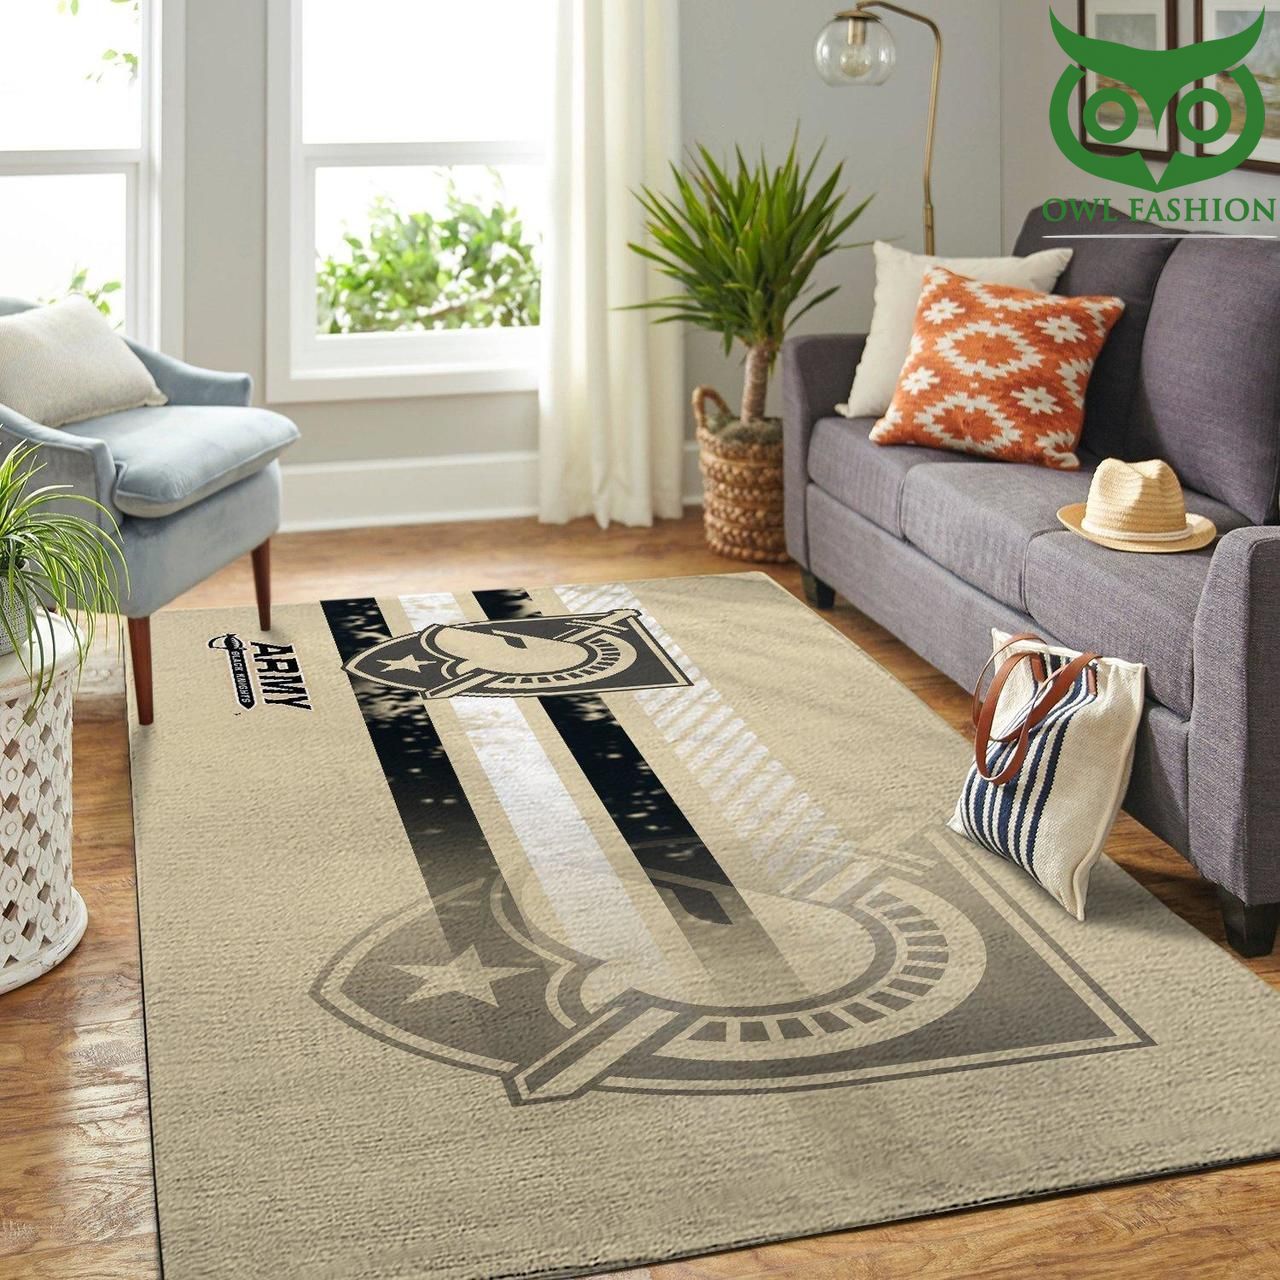 NCAA Army Black Knights room decorate floor carpet rug 